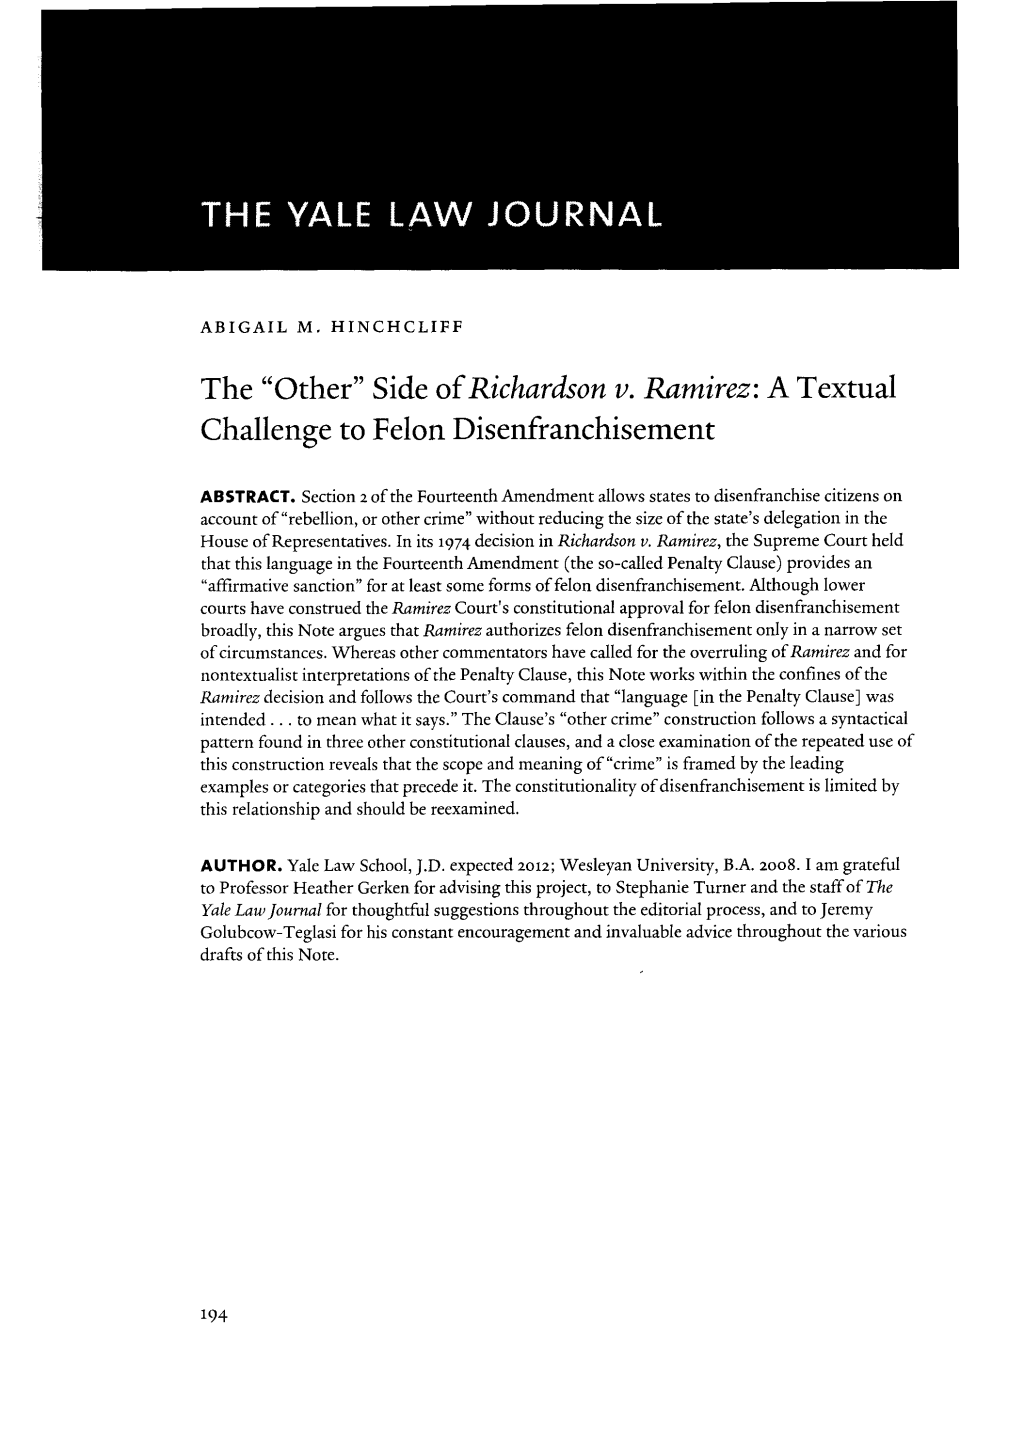 The "Other" Side of Richardson V. Ramirez: a Textual Challenge to Felon Disenfranchisement